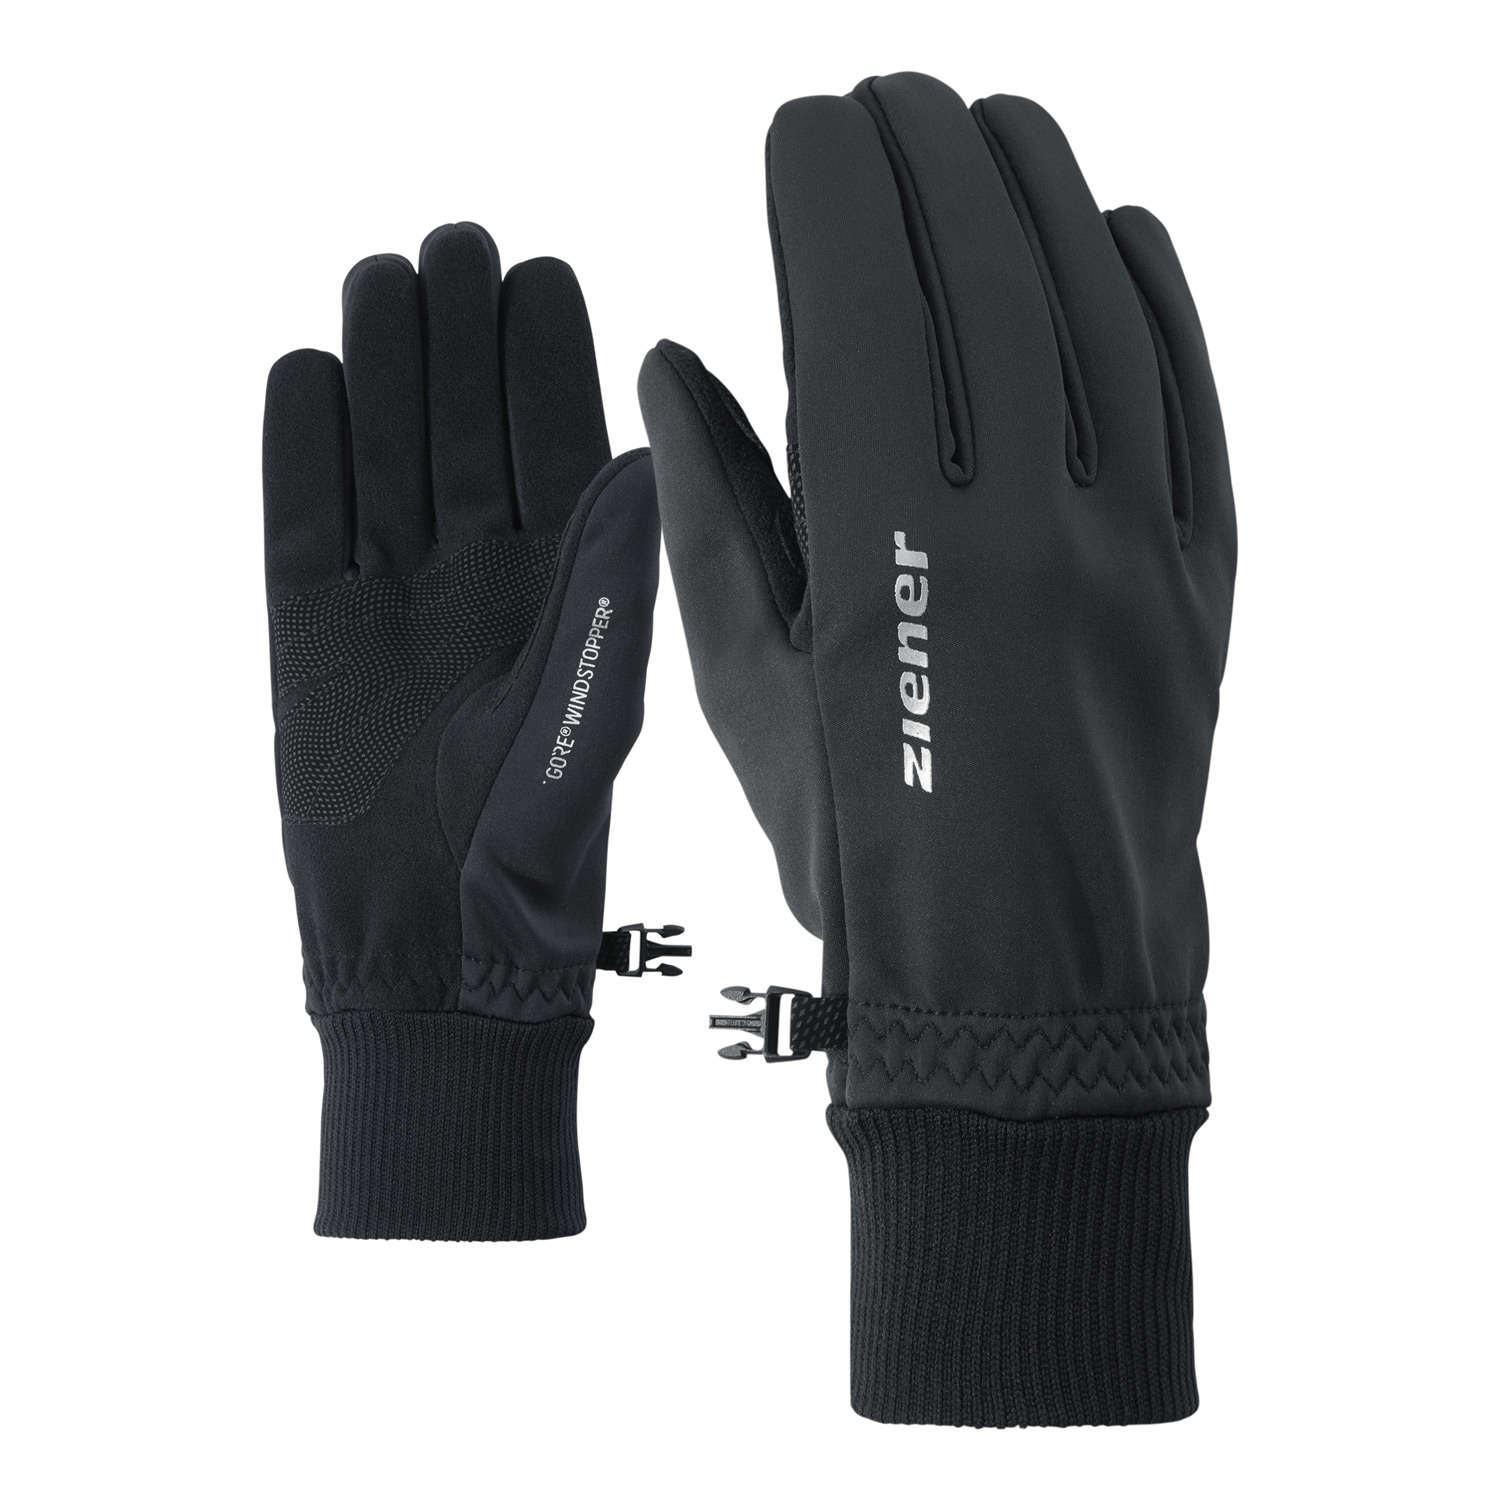 ZIENER IDEALIST GTX INF Glove Multisport Handschuh